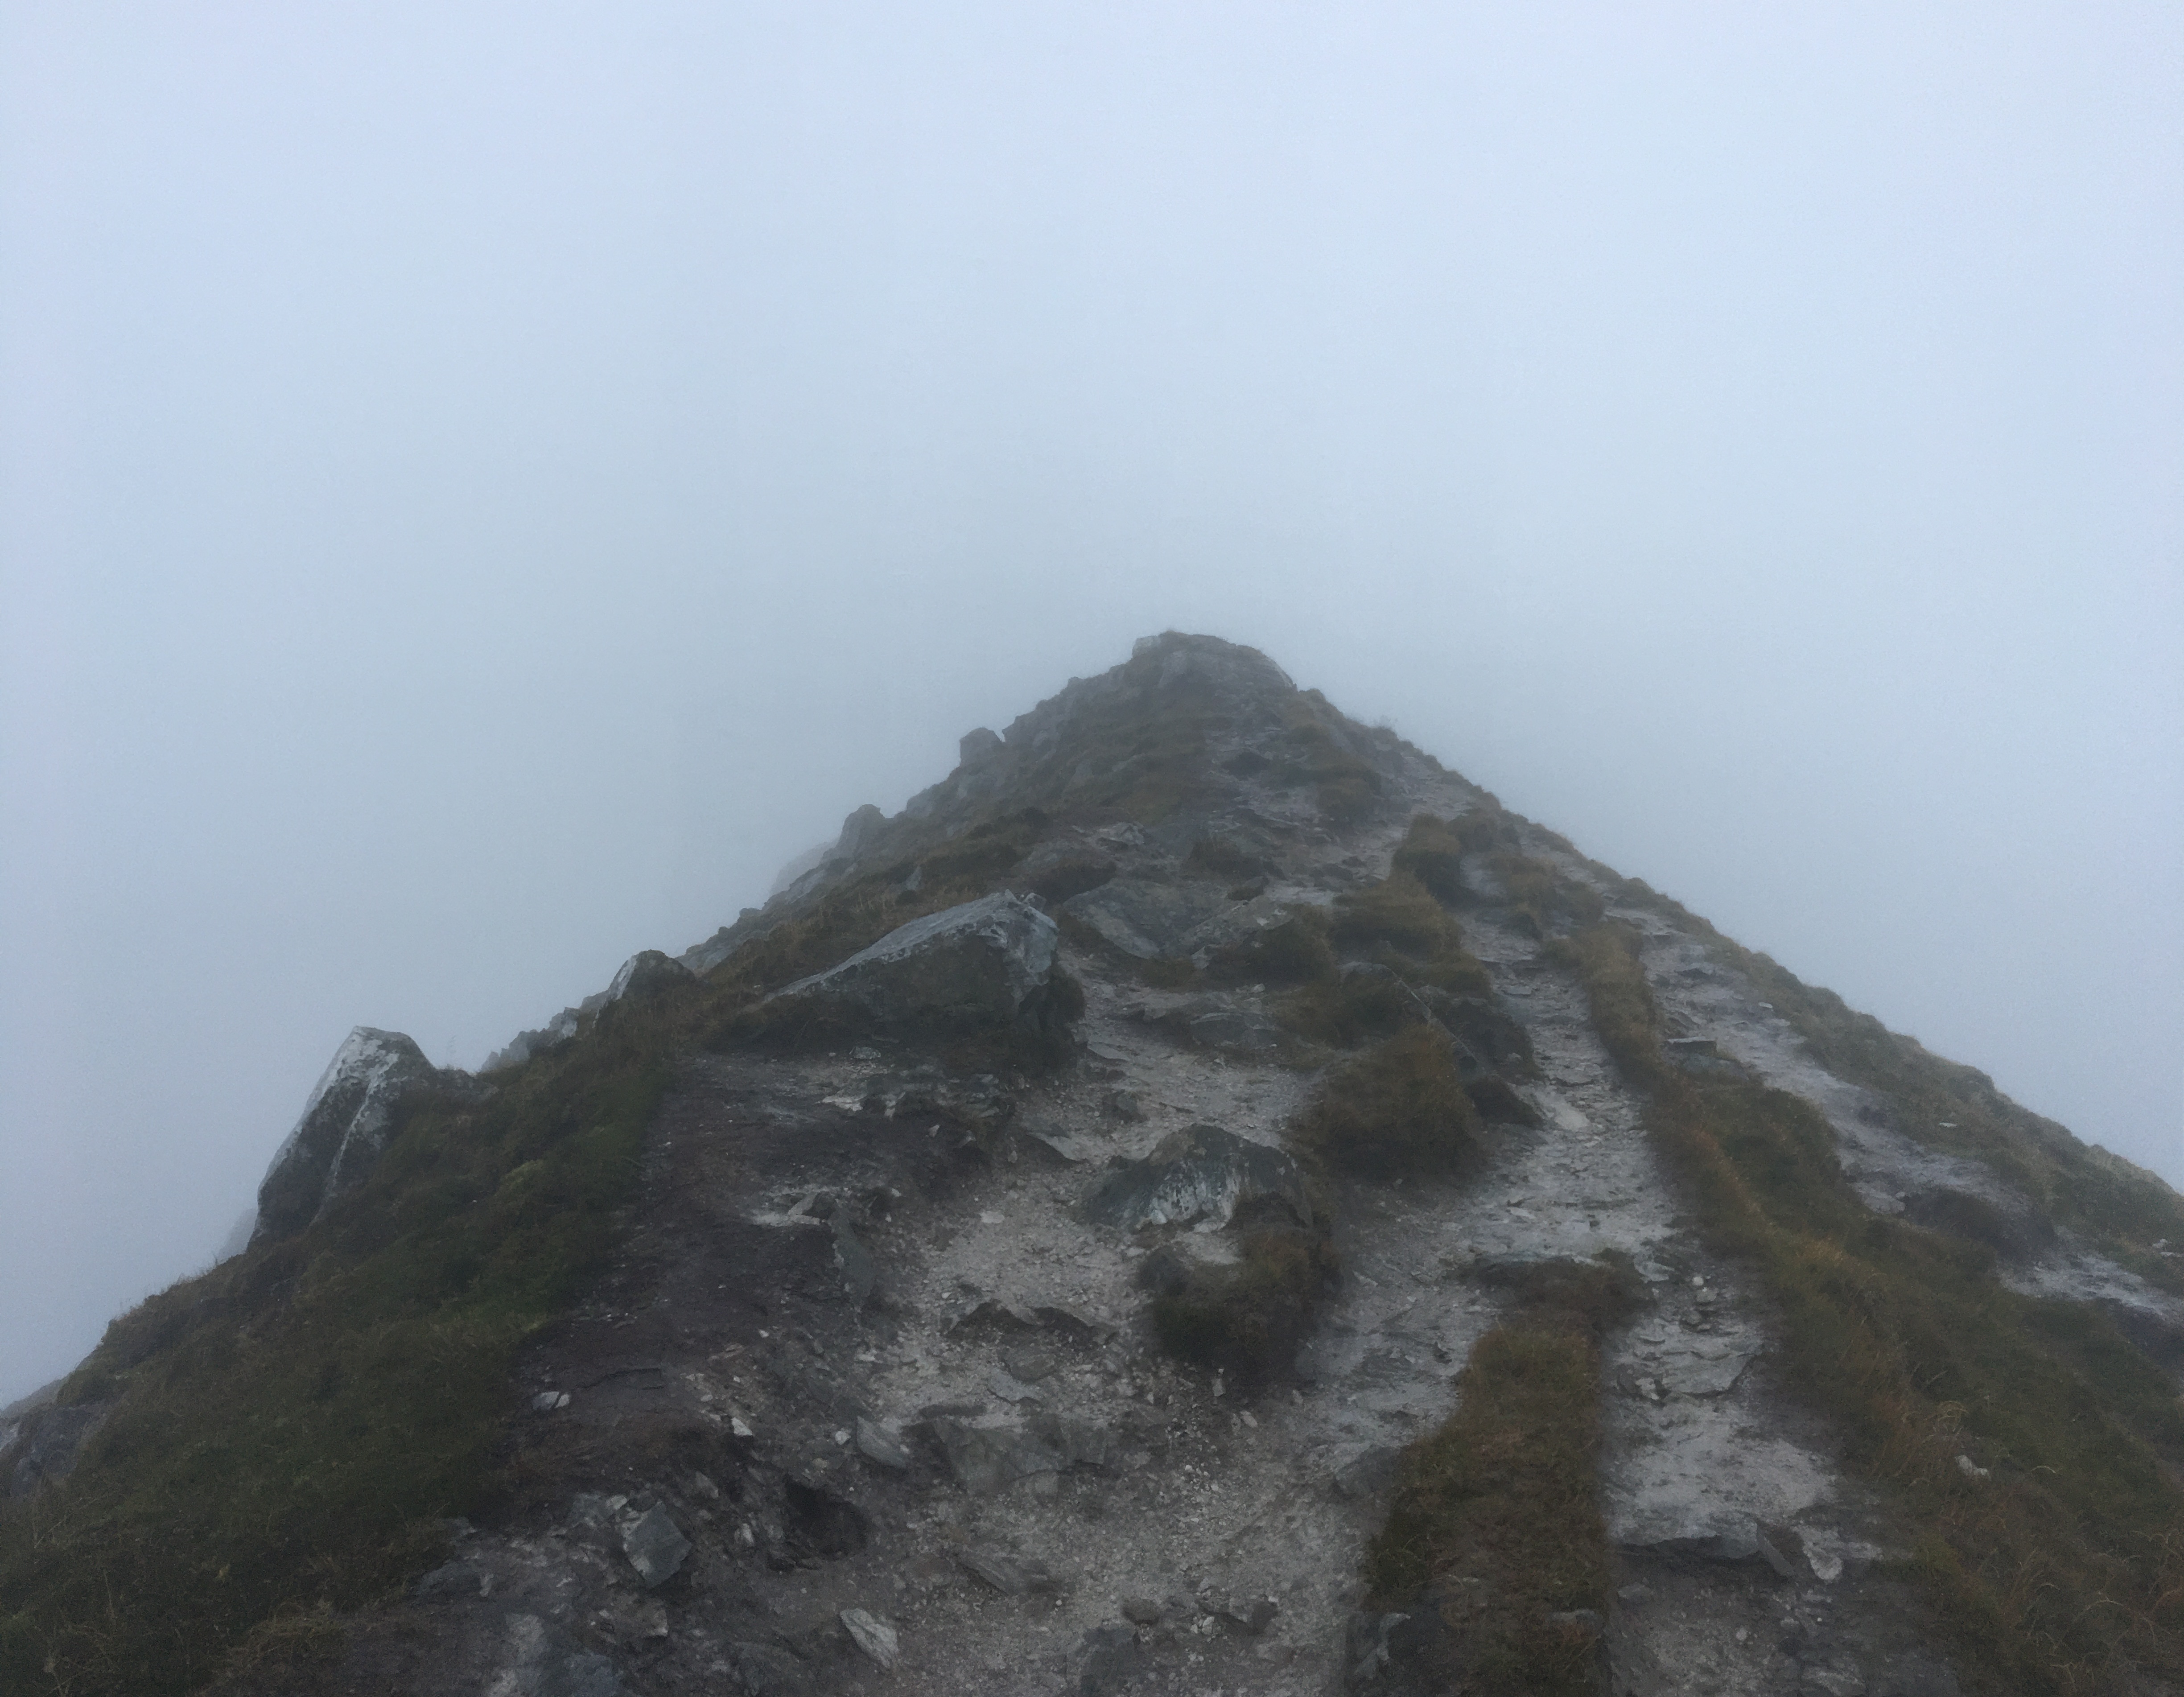 Dense fog on top of Mt. Errigal.